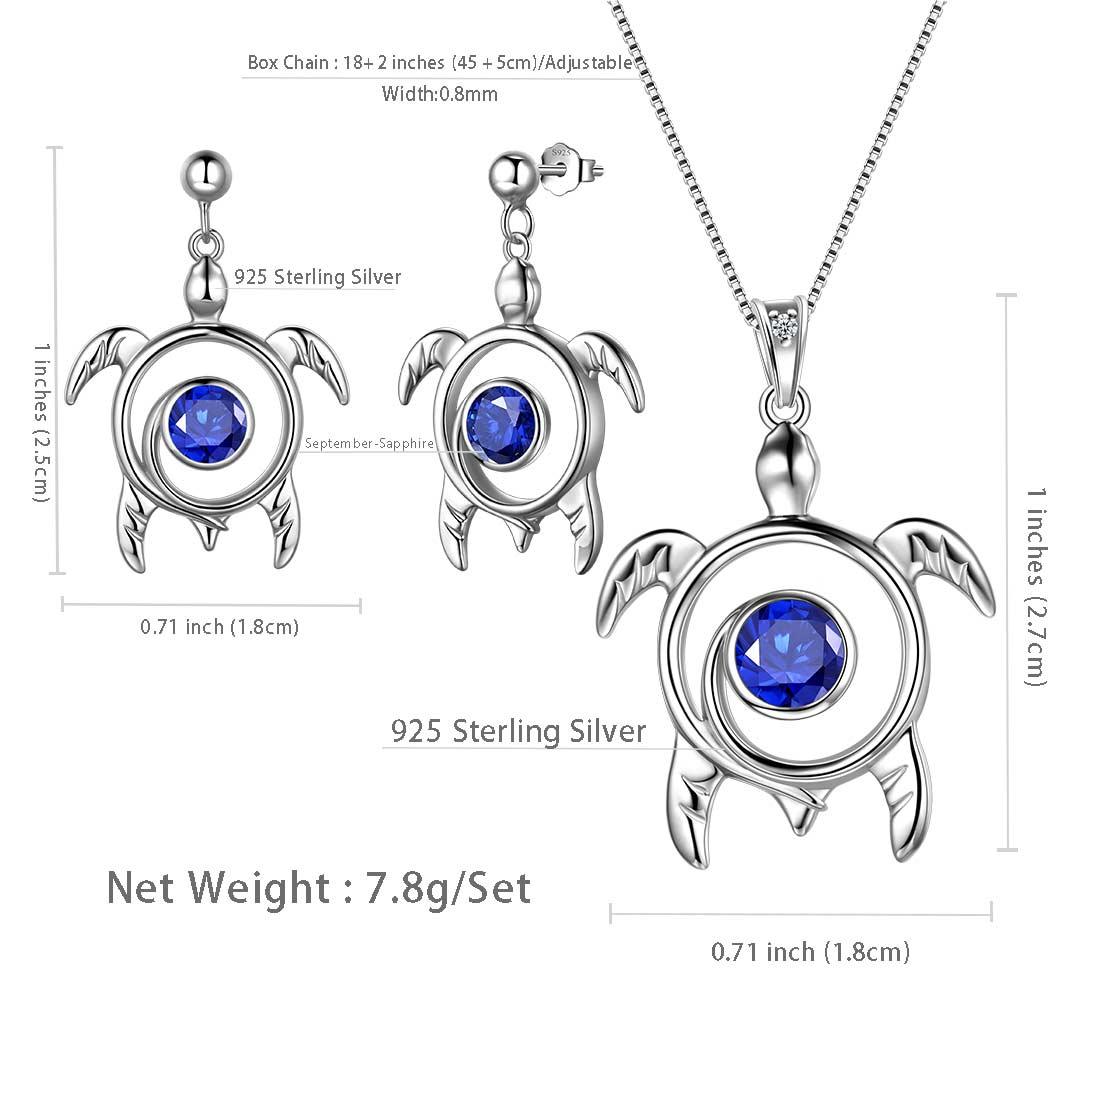 Turtle Birthstone September Sapphire Jewelry Set 3PCS - Jewelry Set - Aurora Tears